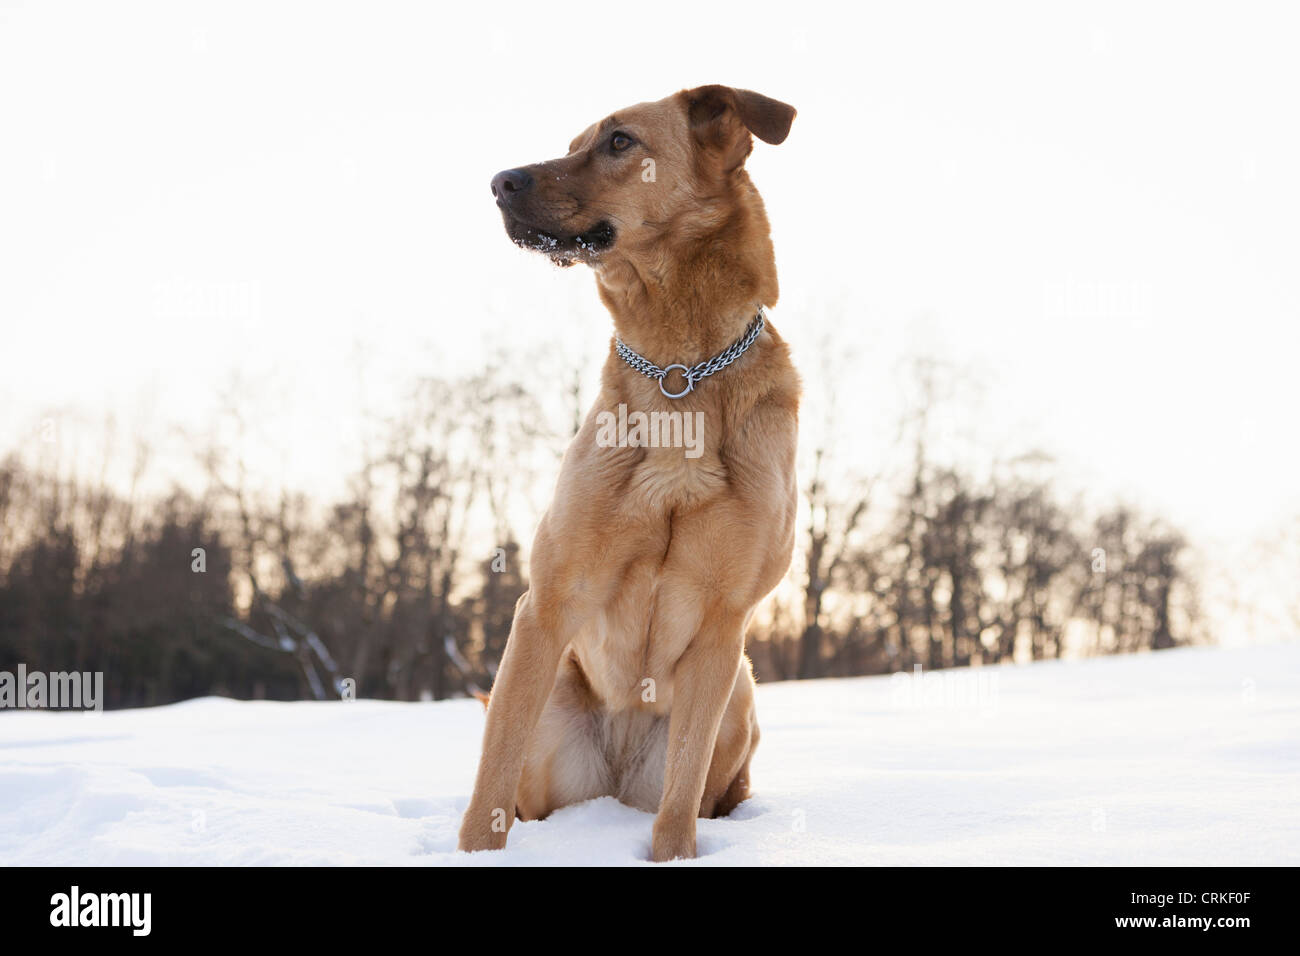 Dog sitting in snowy field Stock Photo